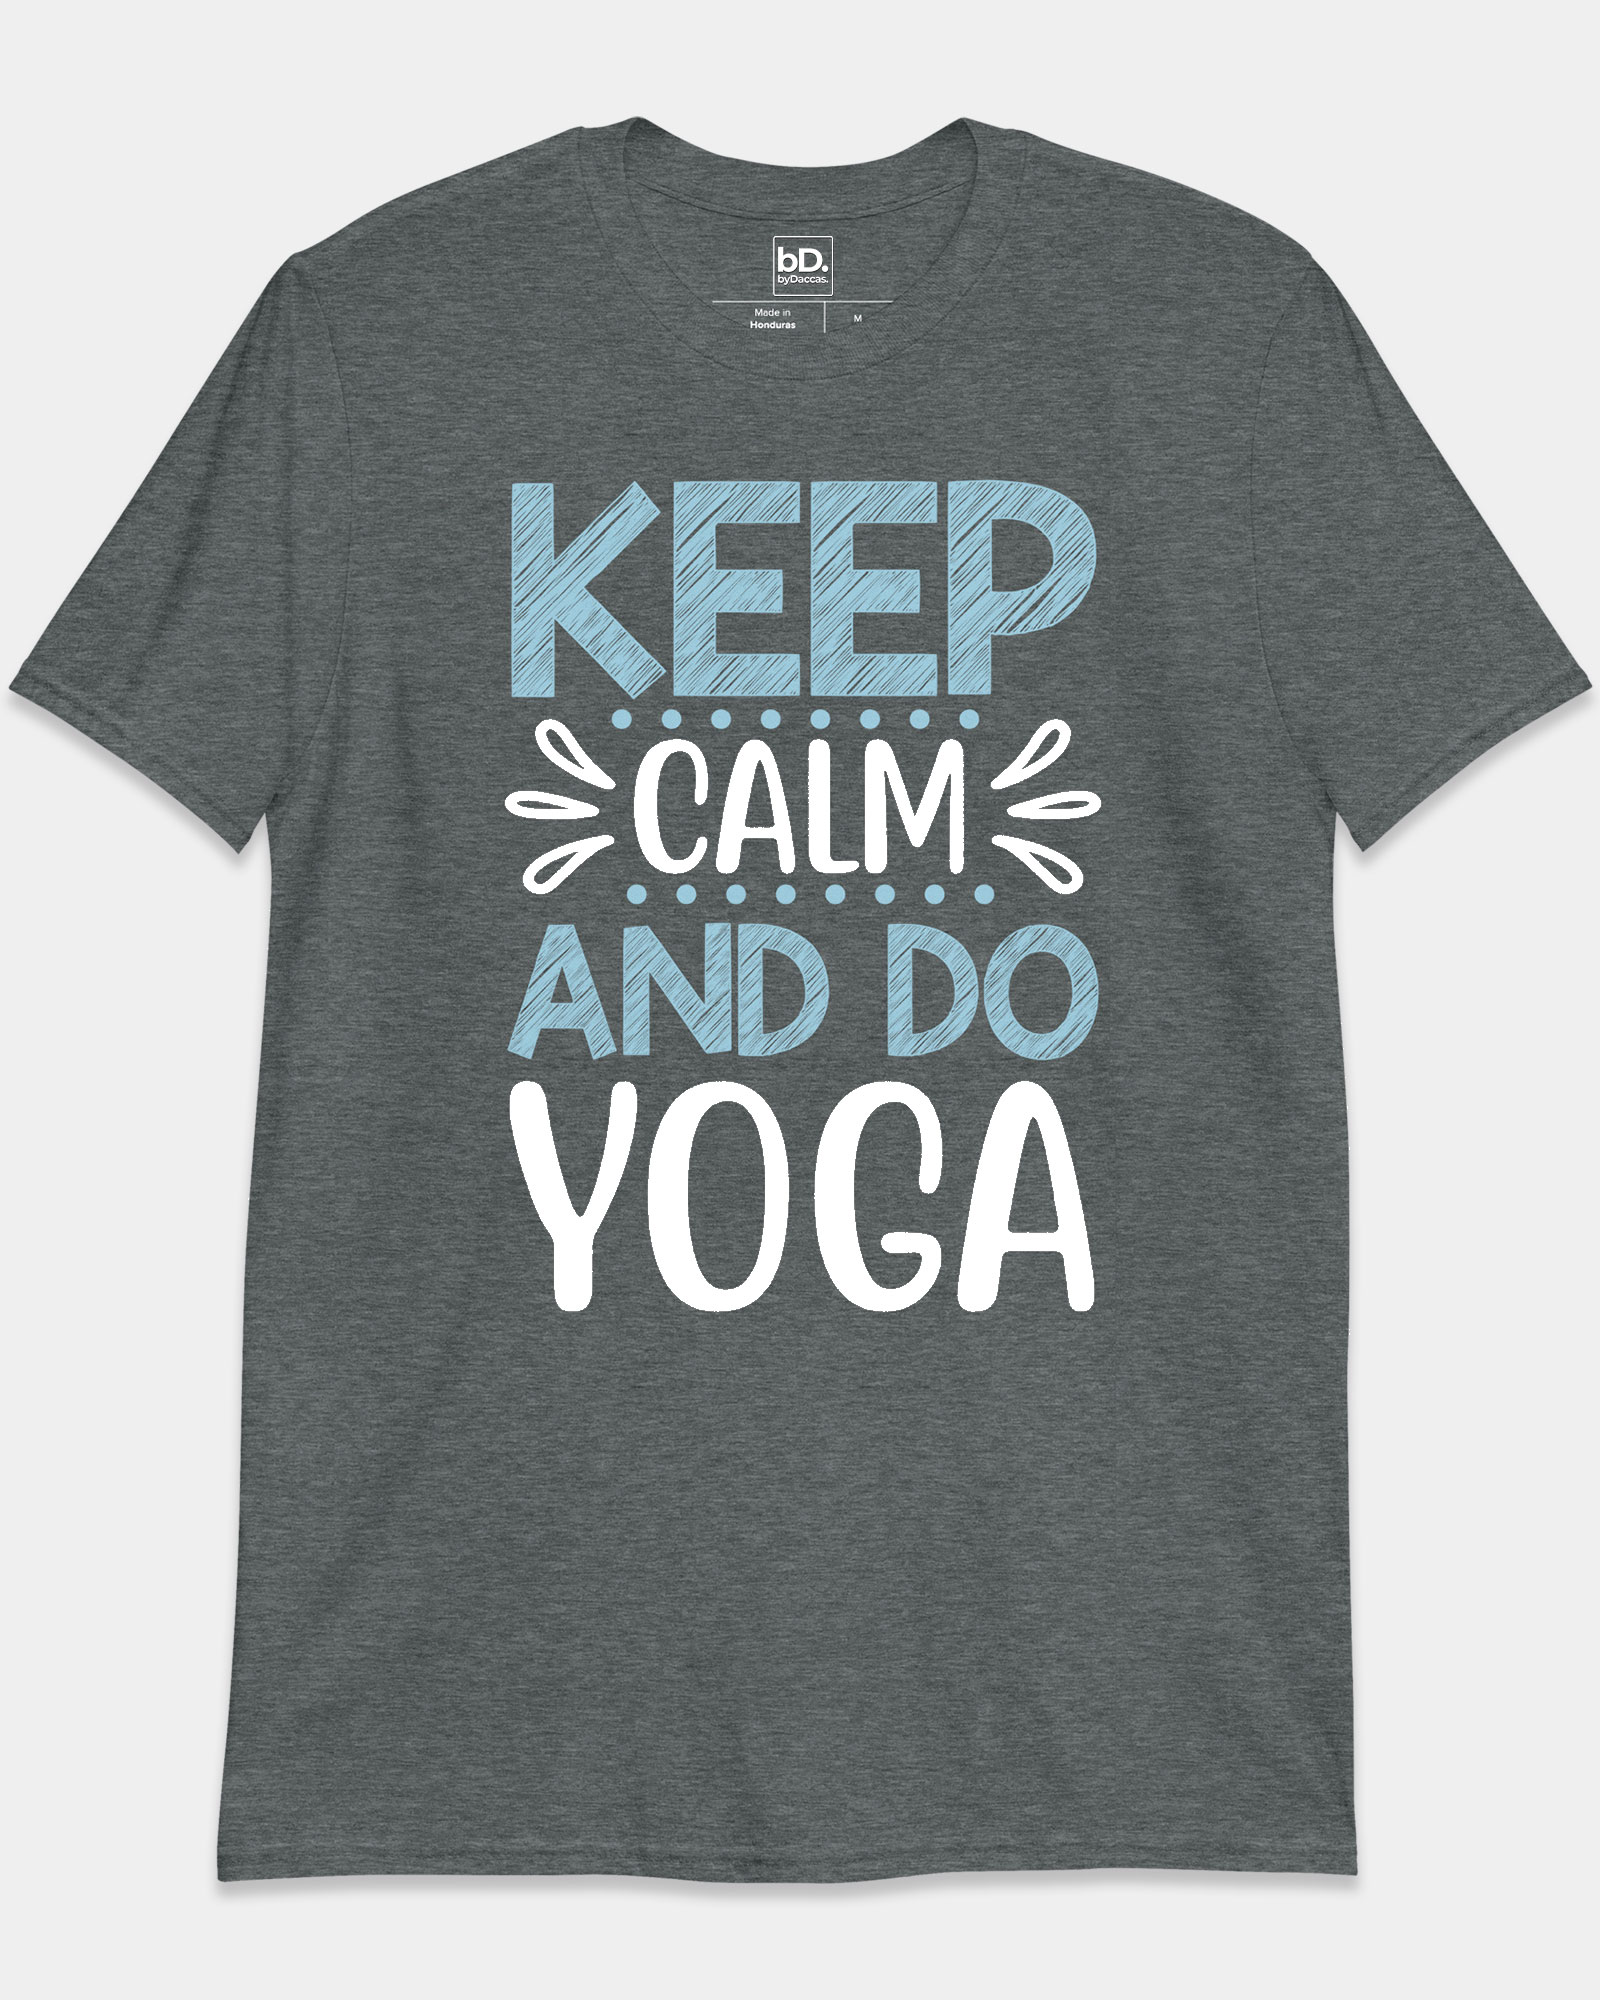 Keep calm and do yoga tshirt for men